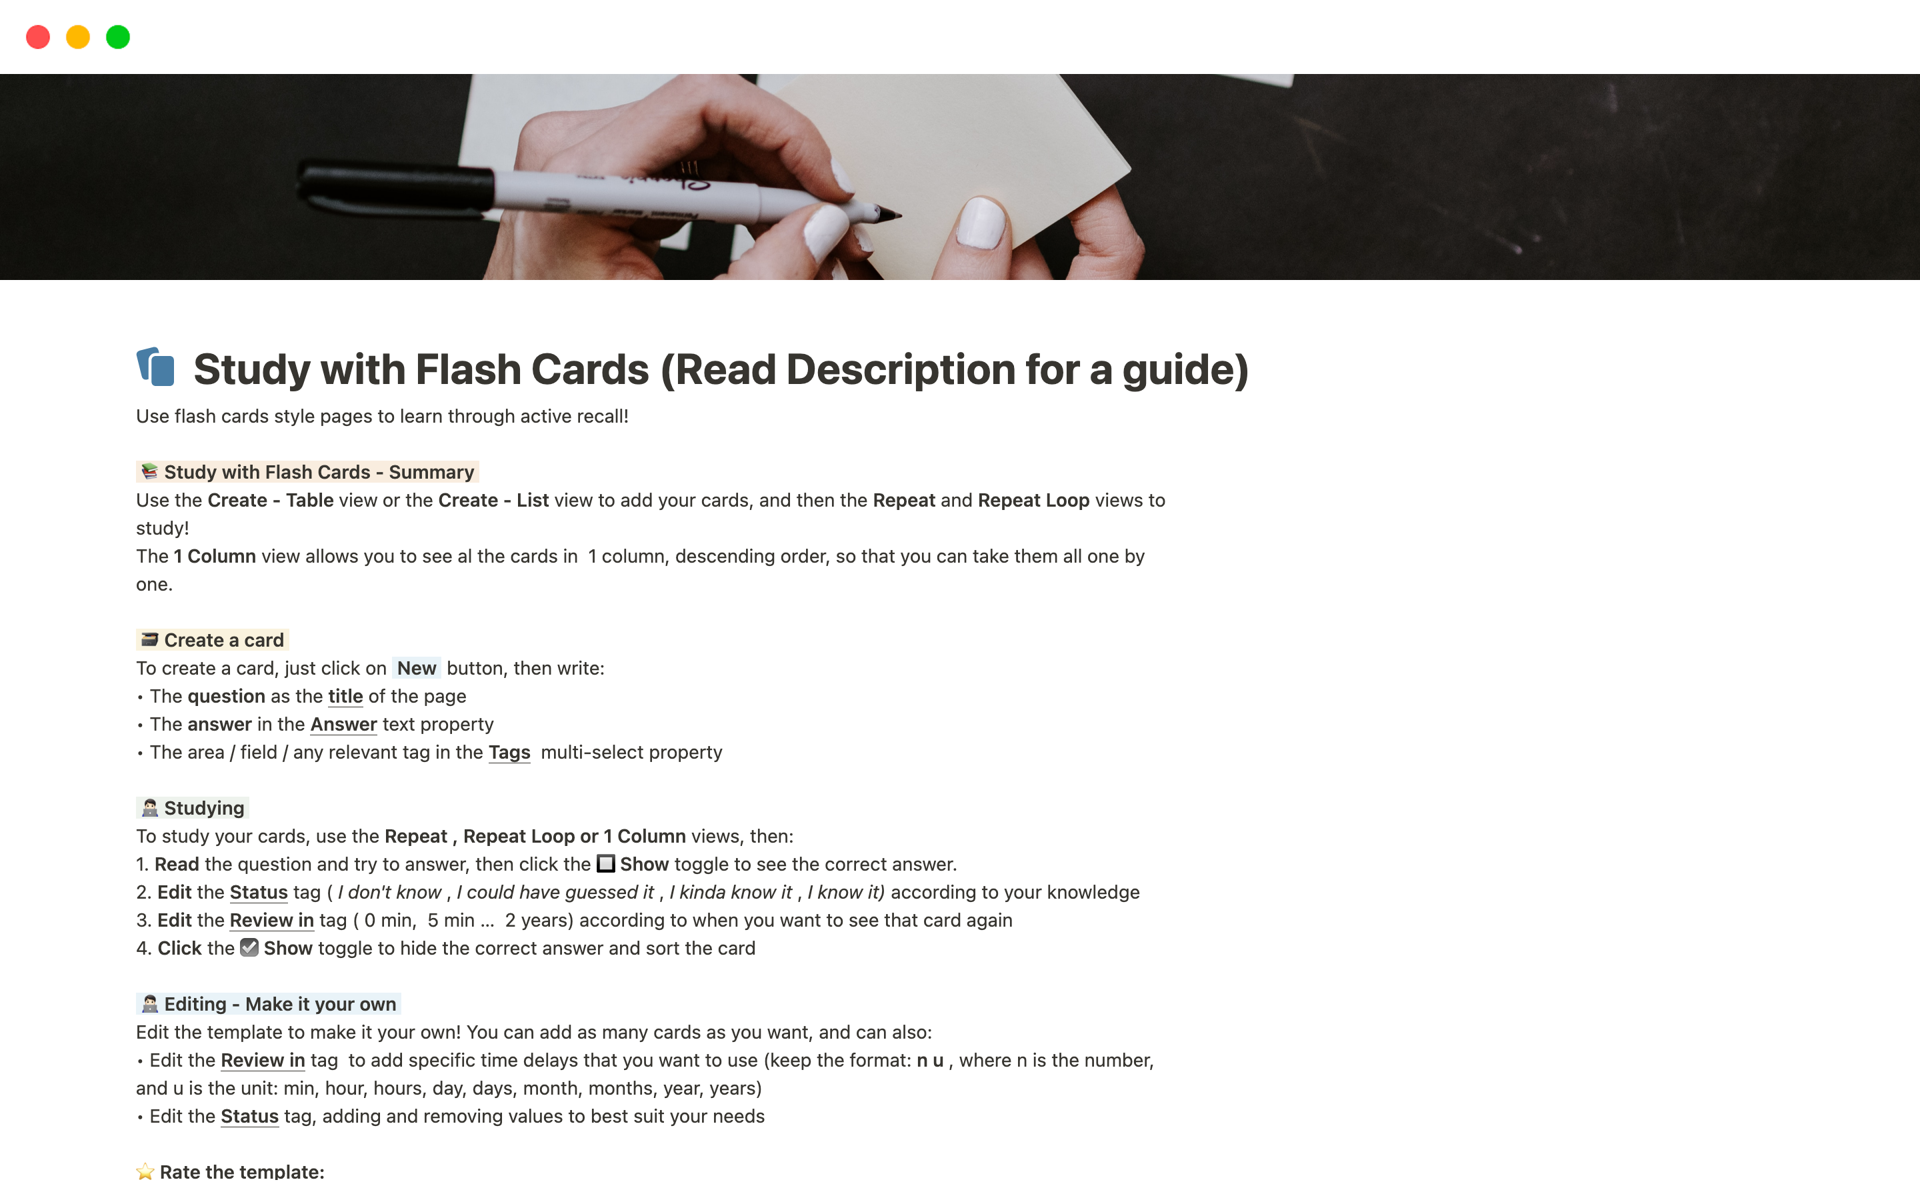 Flash Cards Template - Study using active recall님의 템플릿 미리보기